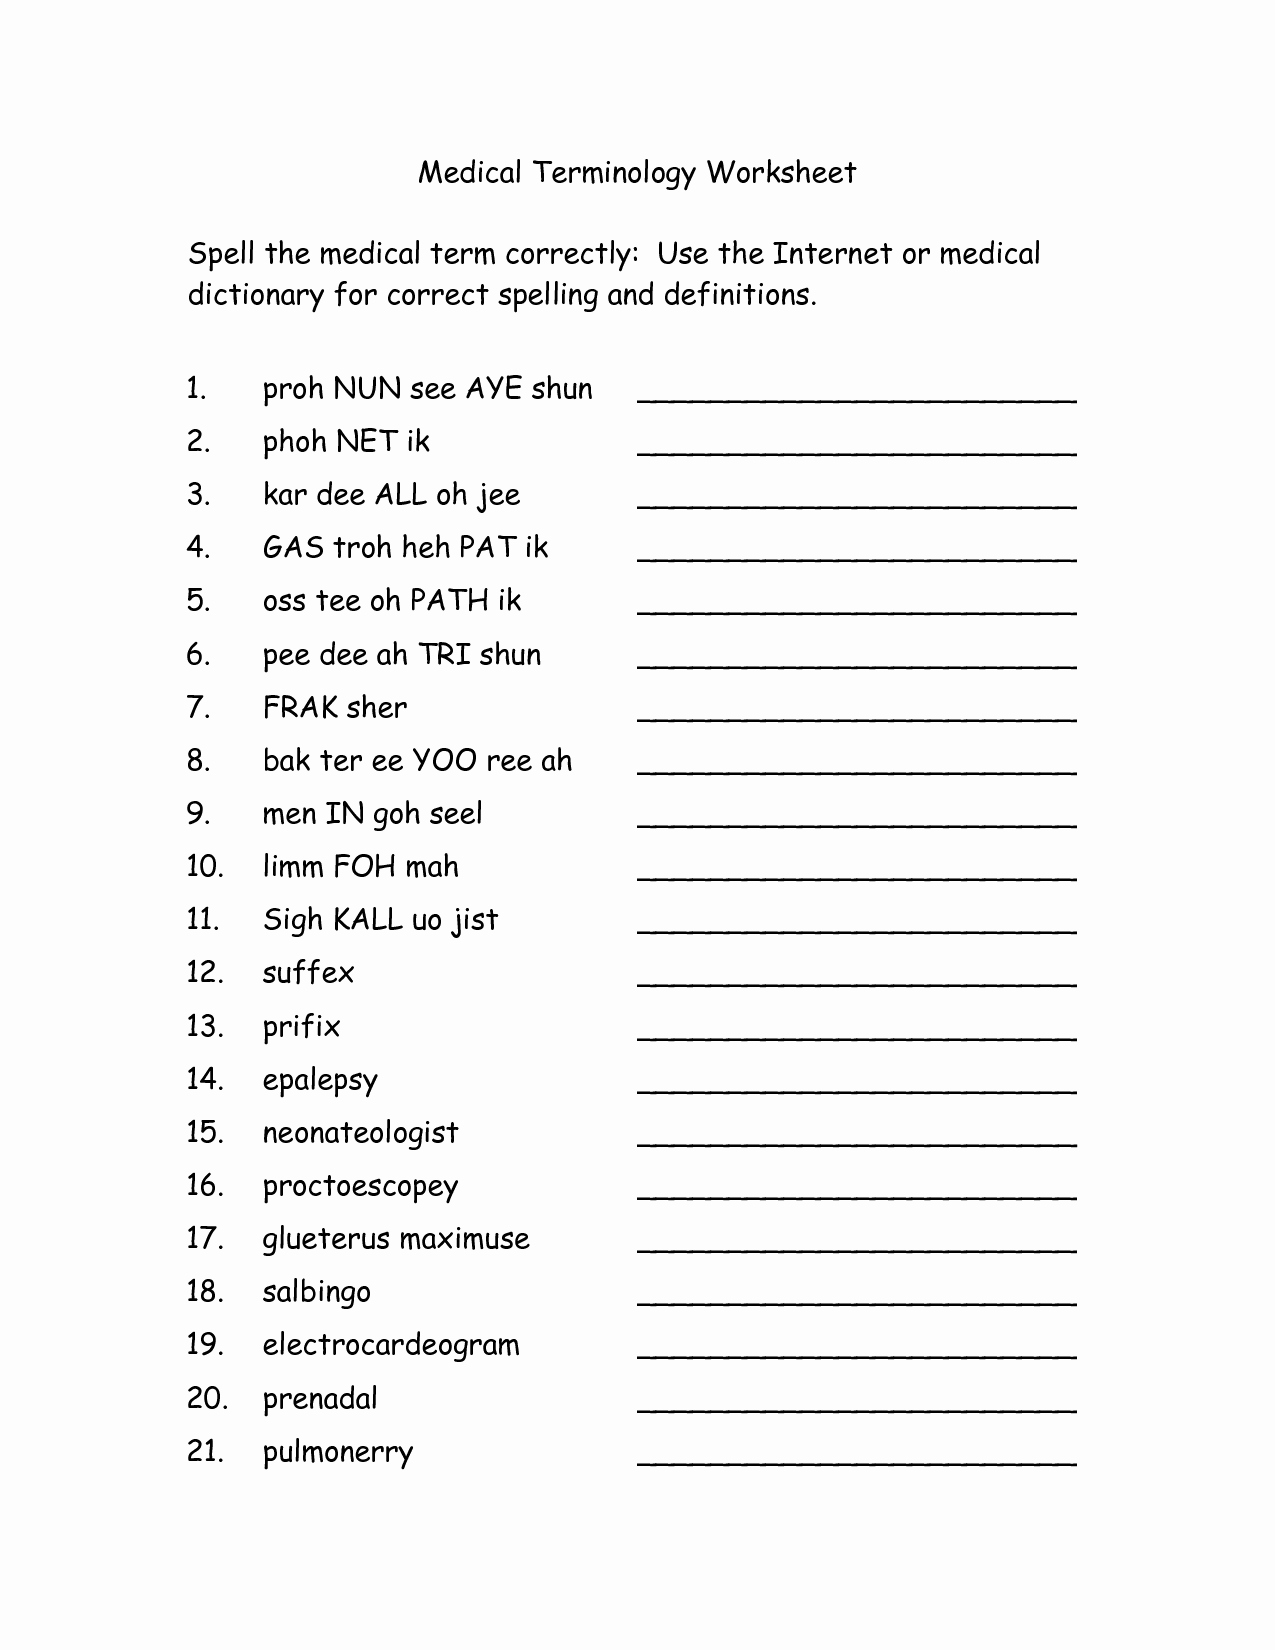 Medical Terminology Abbreviations Worksheet Beautiful Free Printable Medical Terminology Worksheets Cakepins